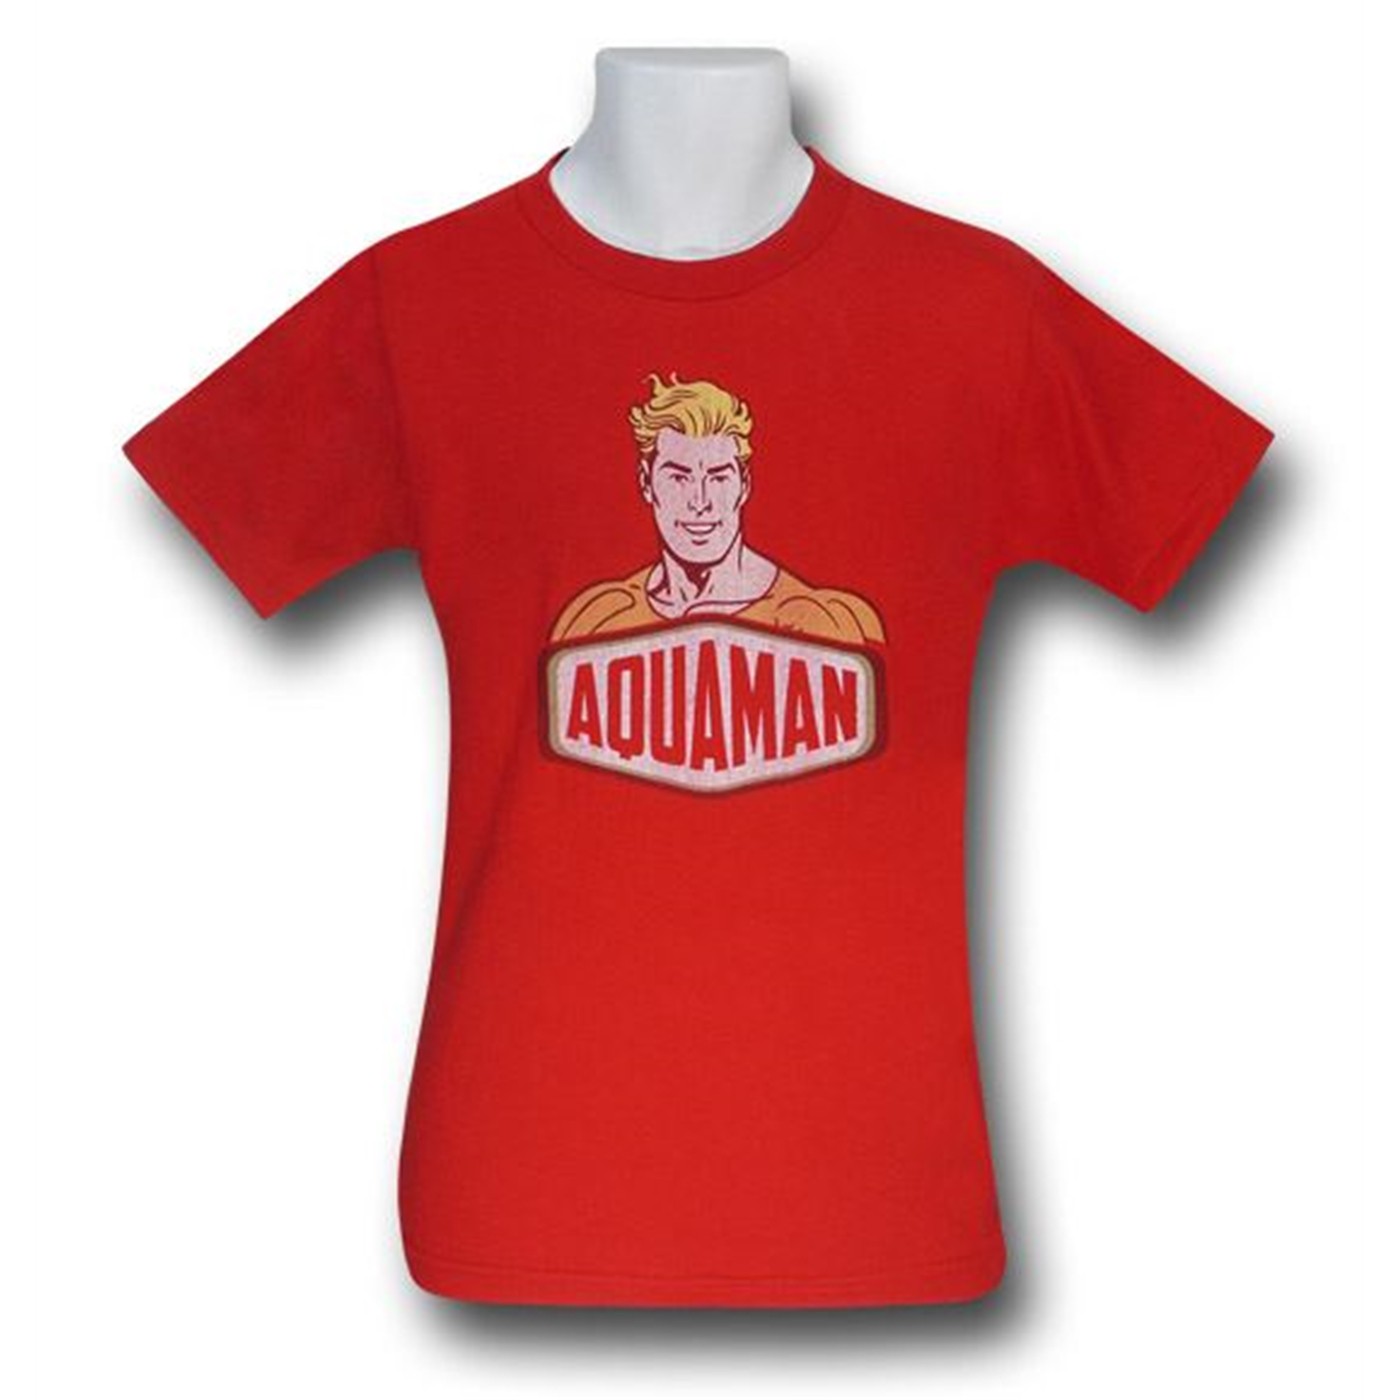 Aquaman Sign On Red T-Shirt